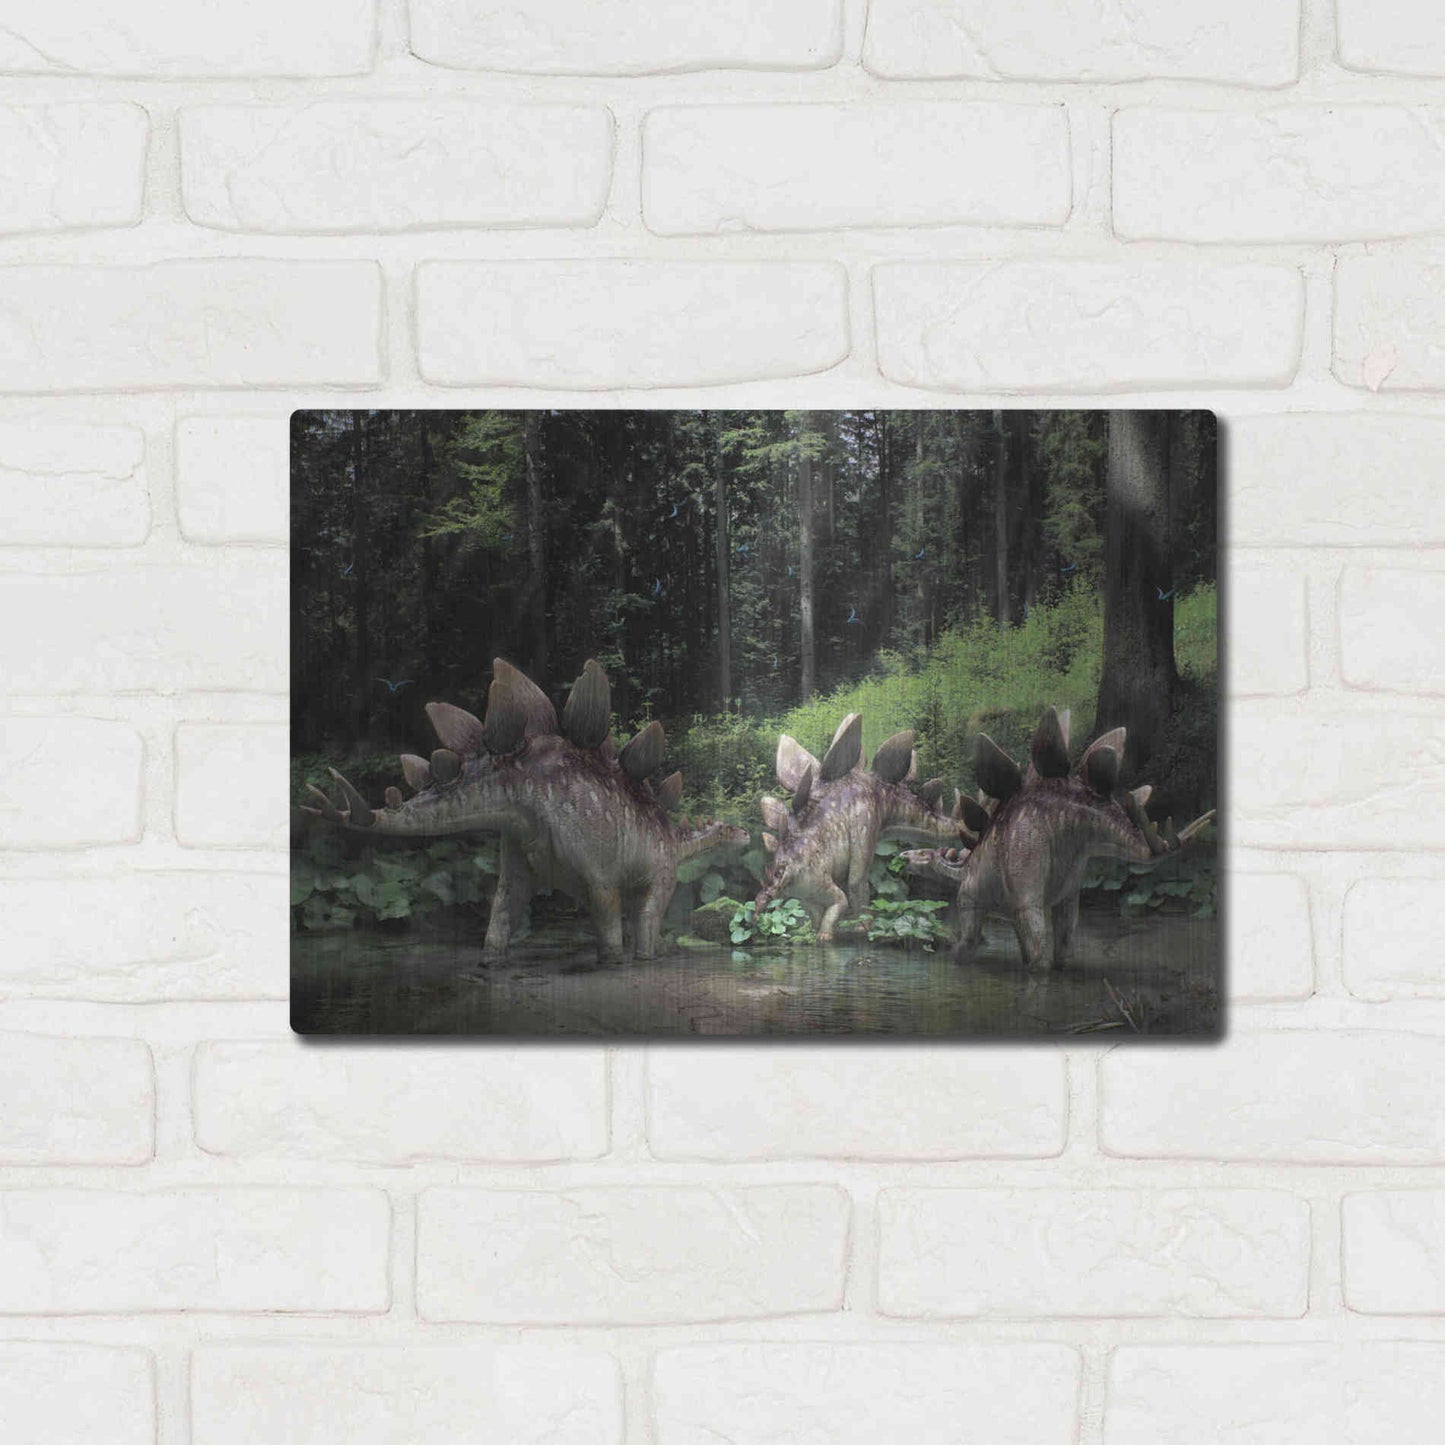 Luxe Metal Art 'Stegosaurus Family', Metal Wall Art,16x12